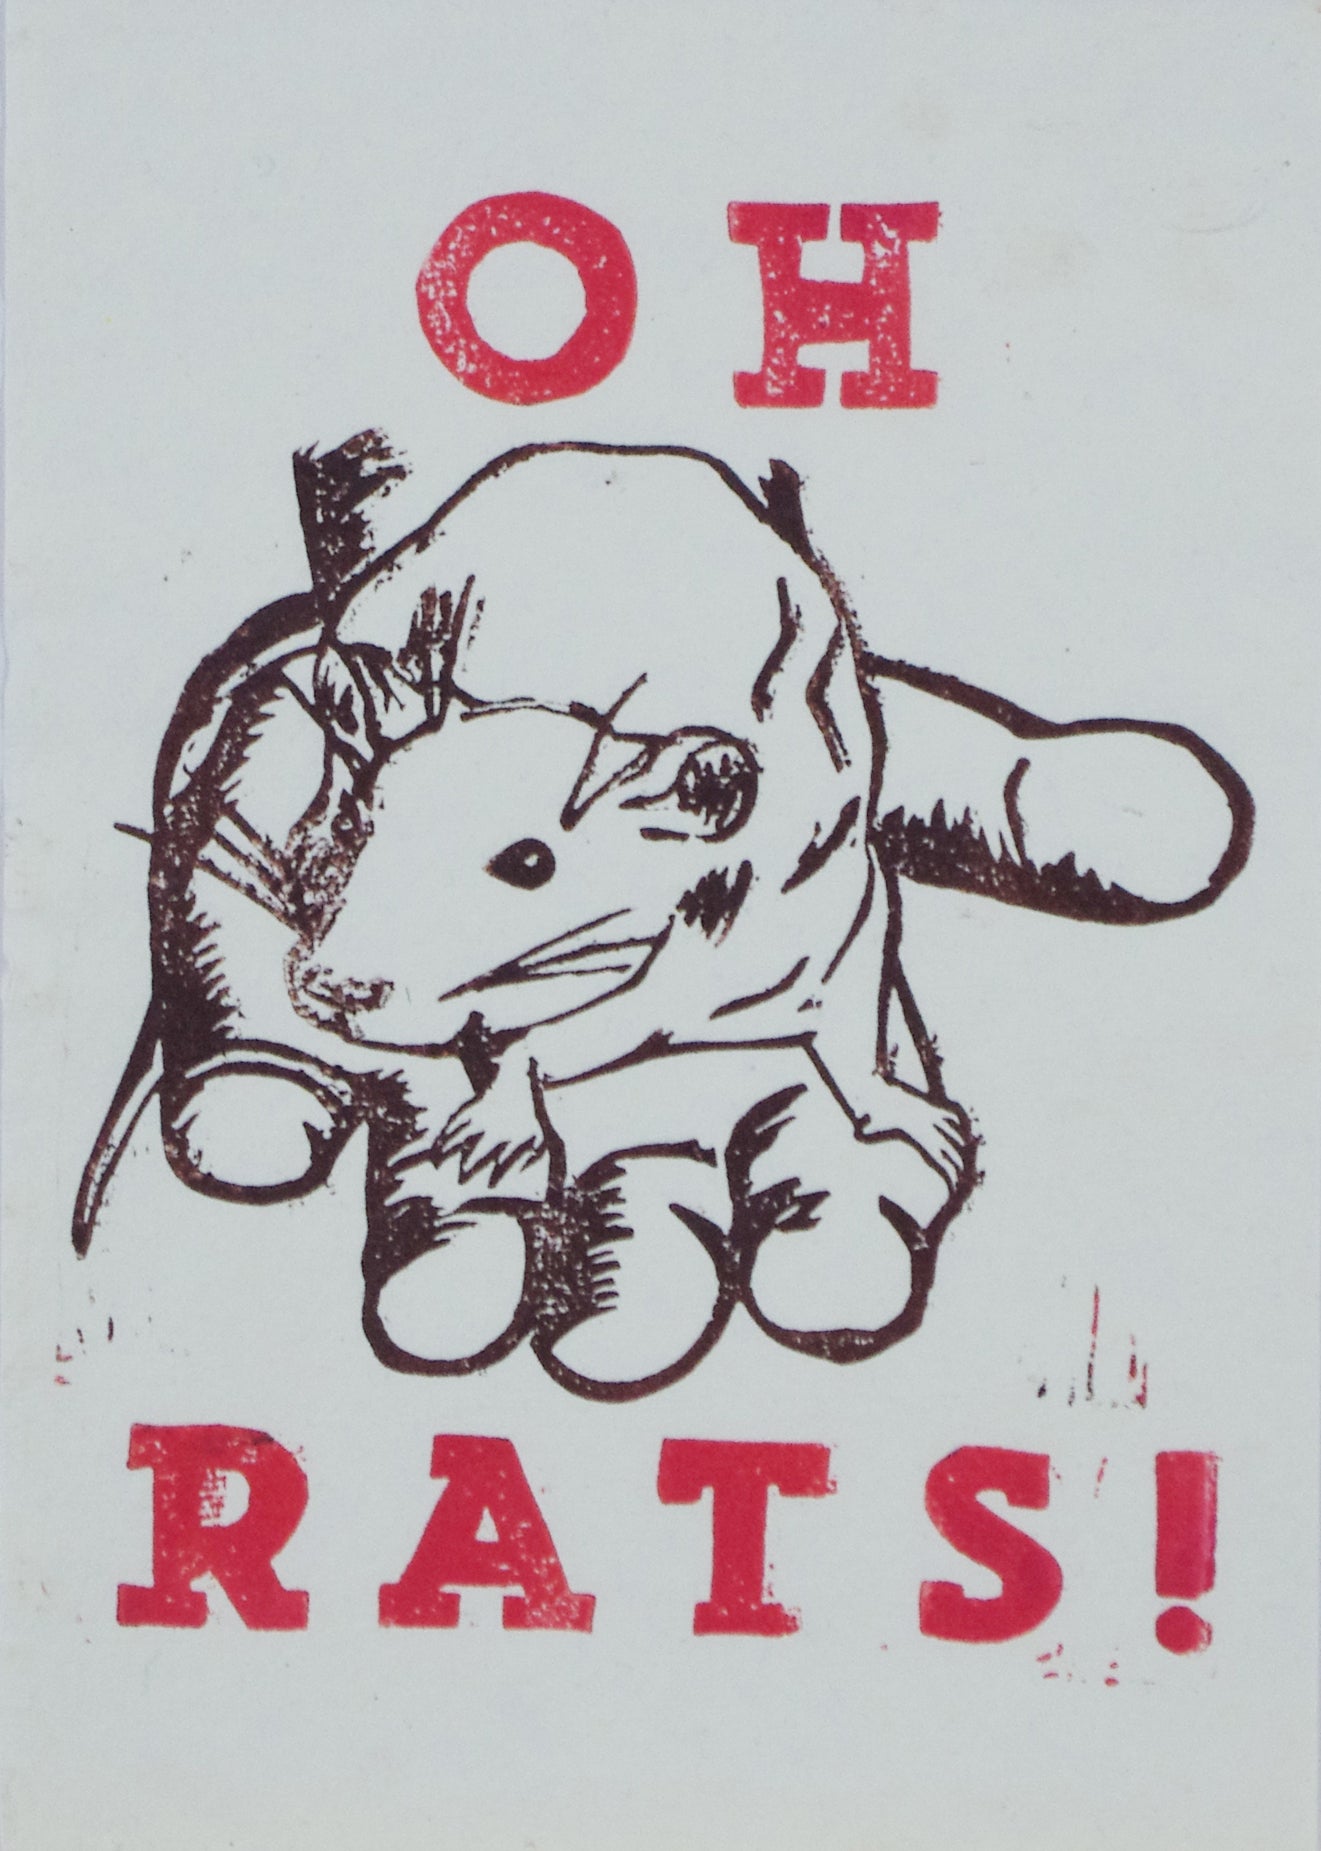 RattyCatCat - Oh Rats!